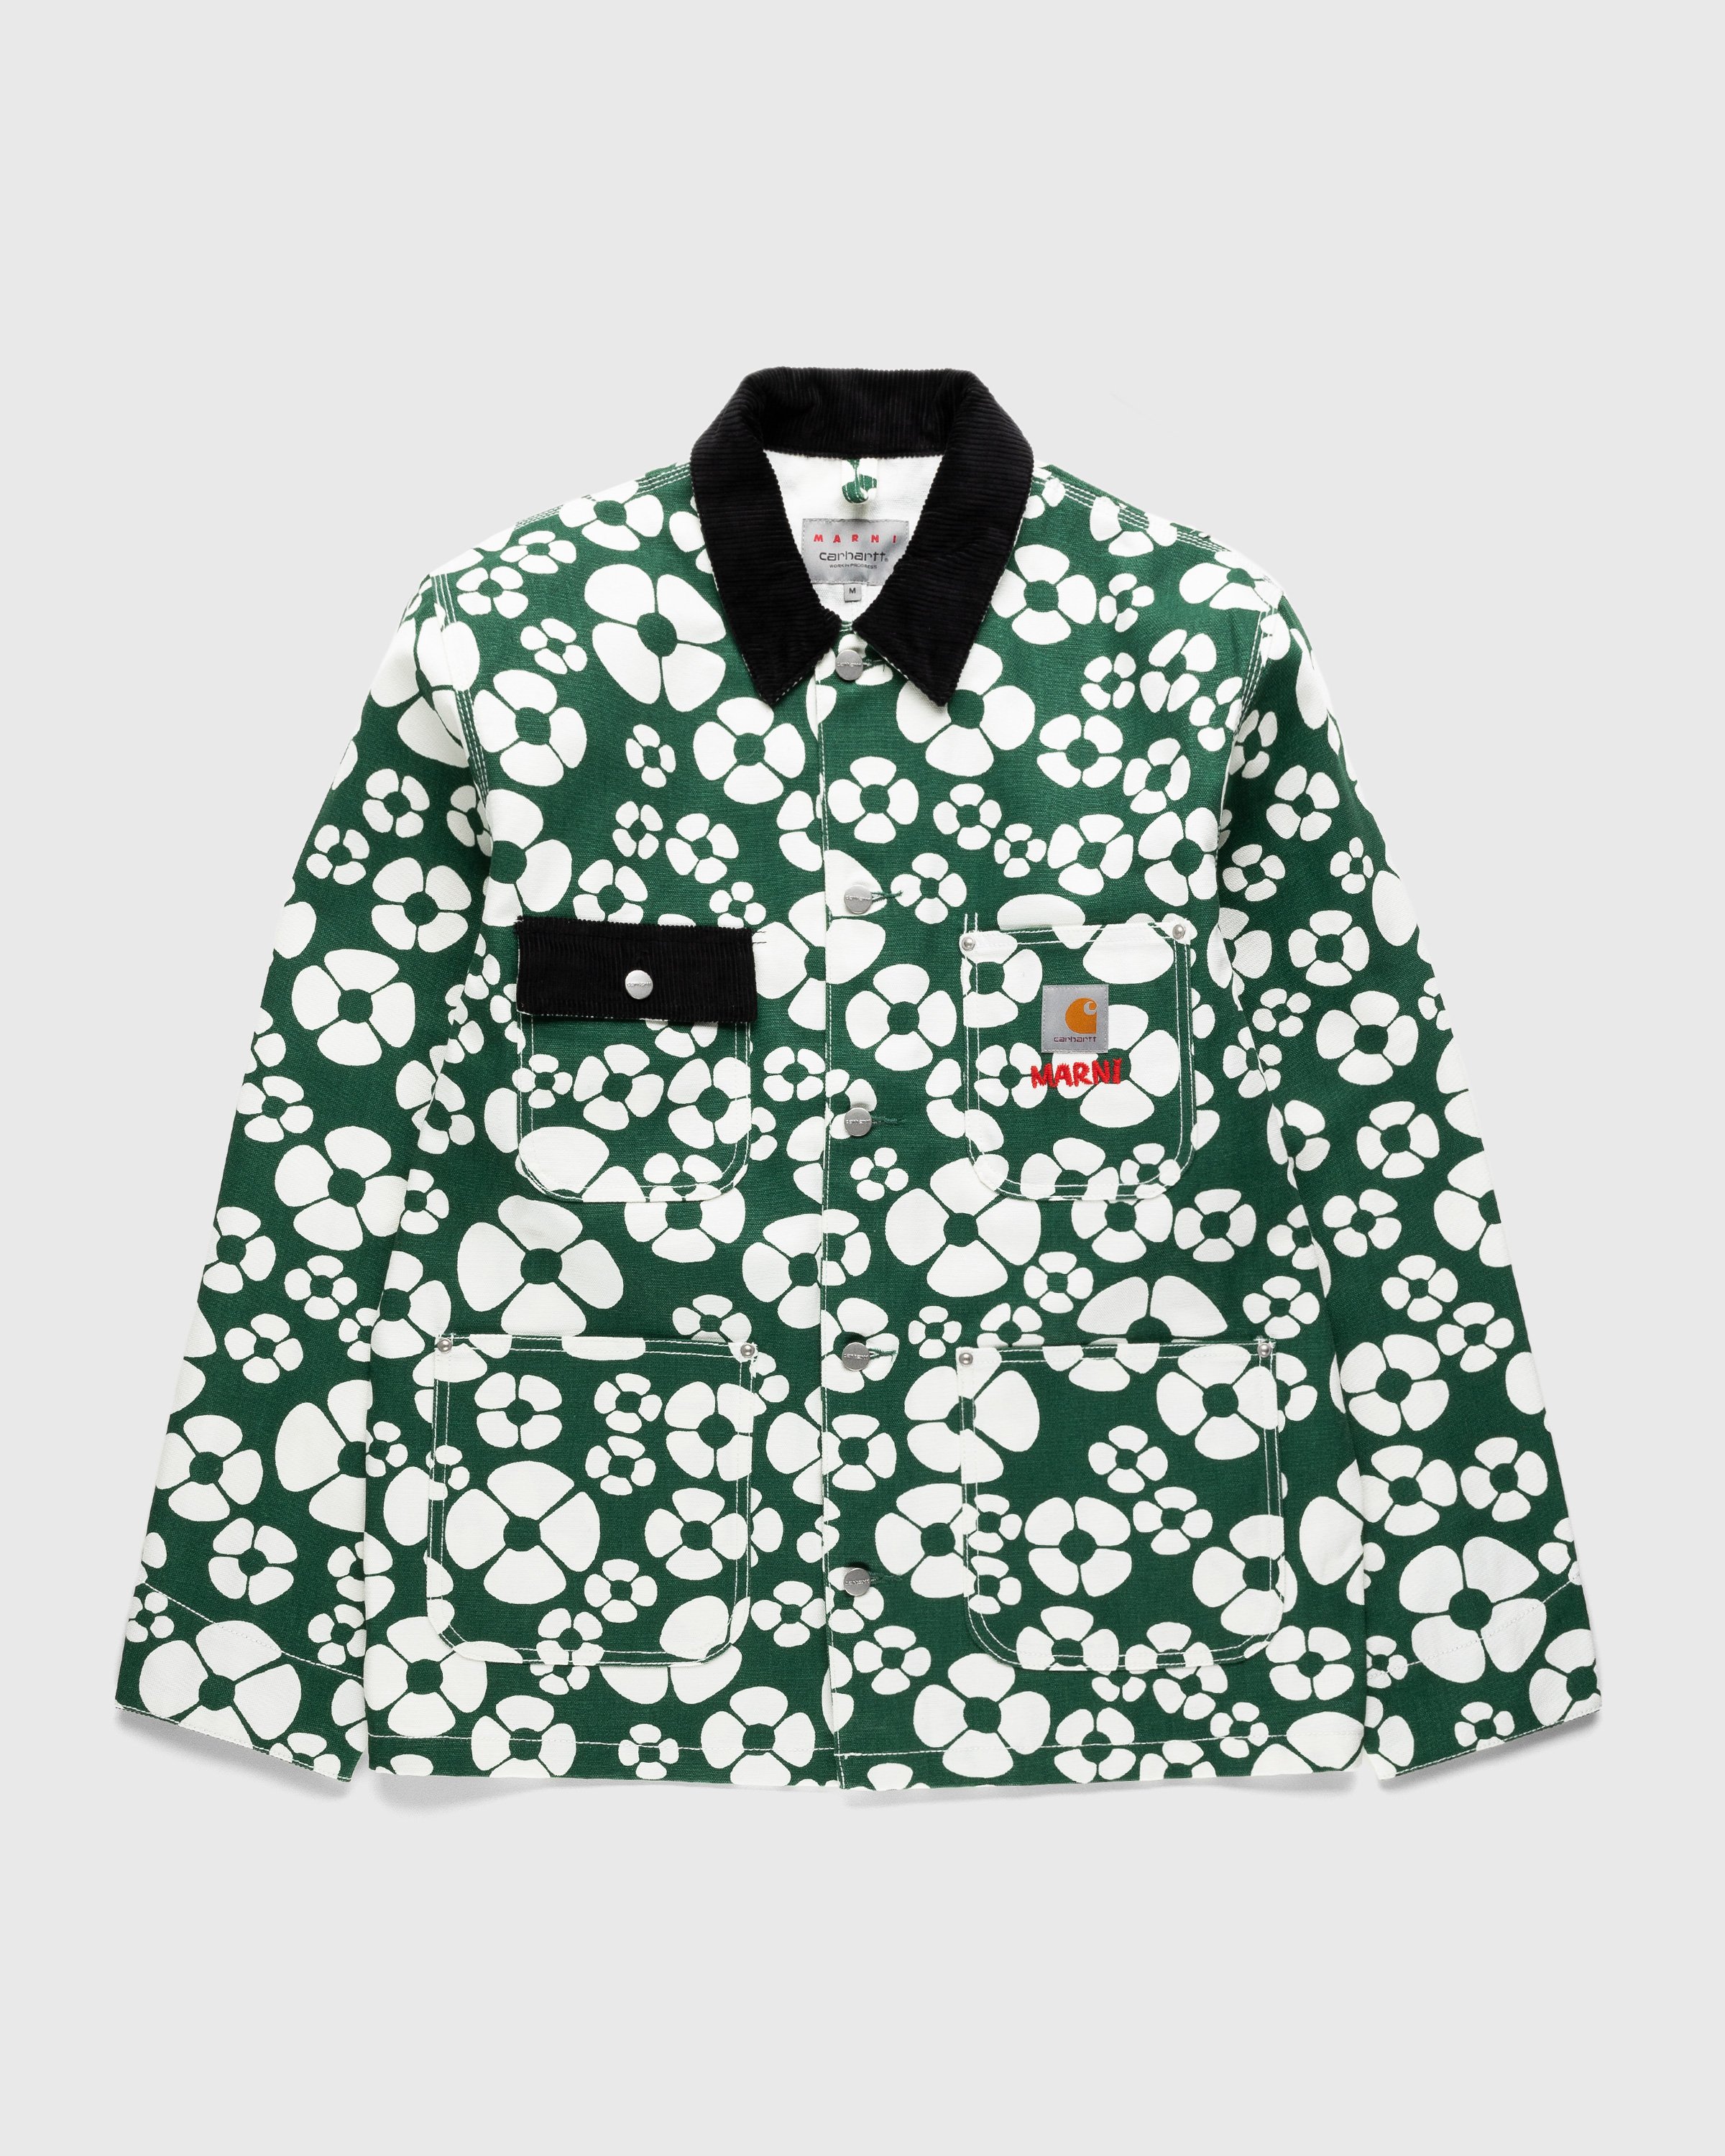 Marni x Carhartt WIP - Floral Jacket Green - Clothing - Green - Image 1